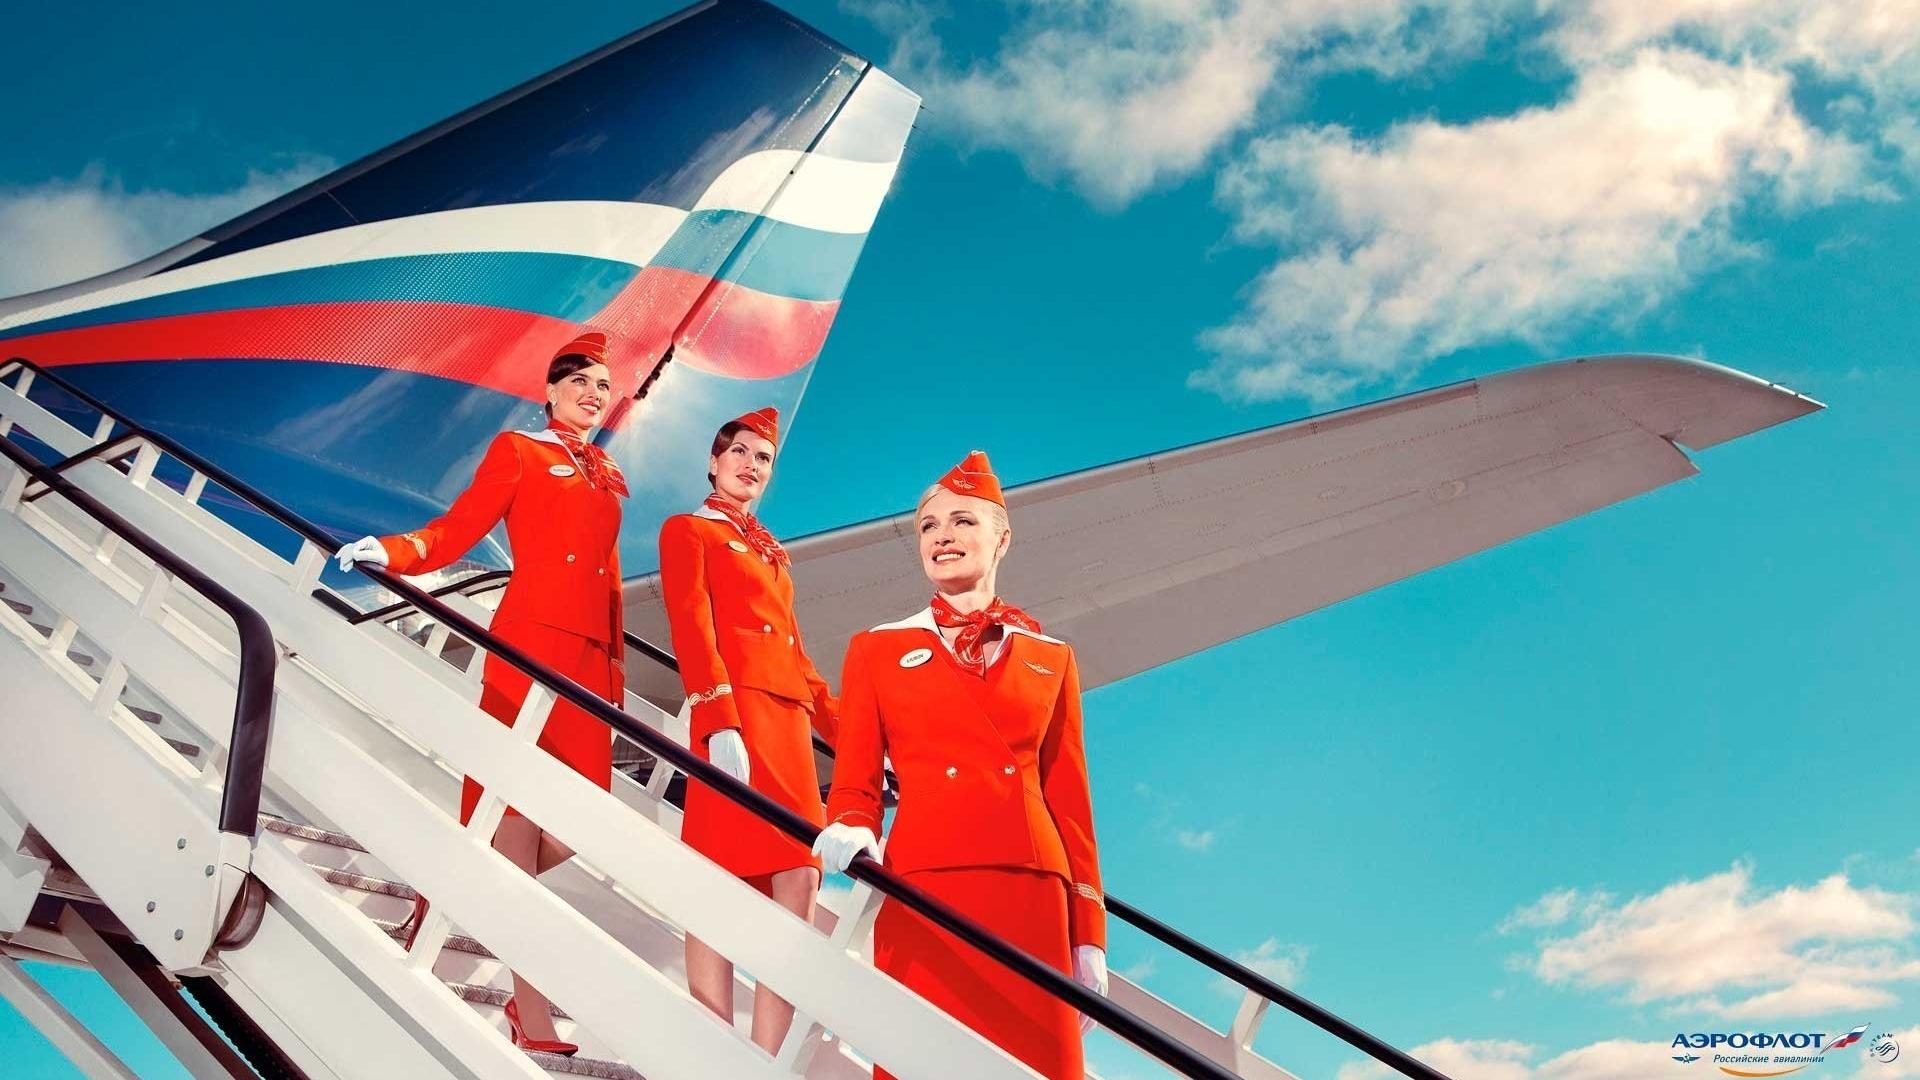 flight attendant wallpaper,sky,air travel,airplane,adventure,general aviation